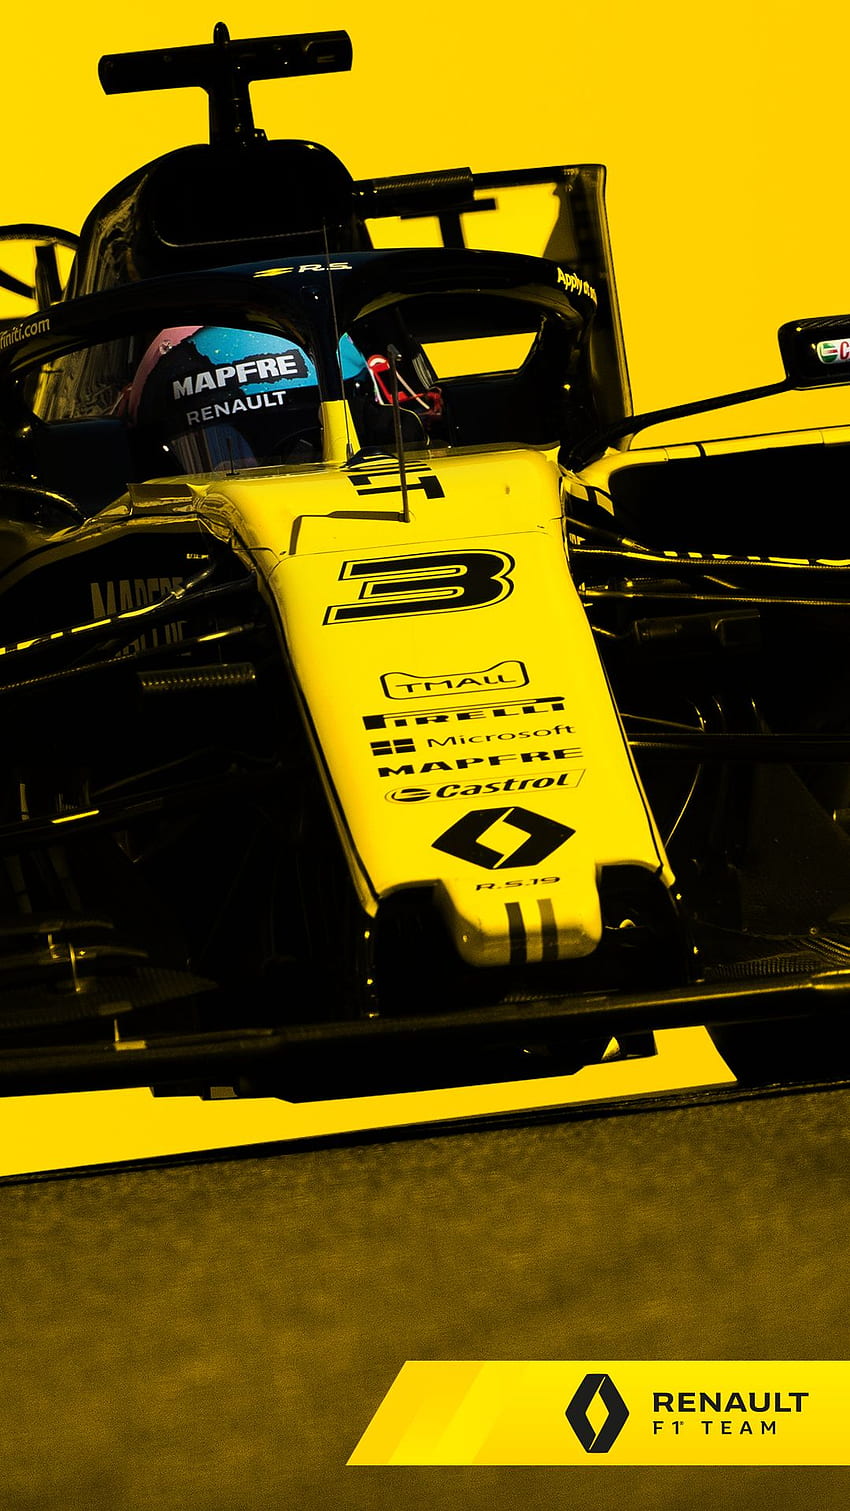 100+] Daniel Ricciardo Wallpapers | Wallpapers.com